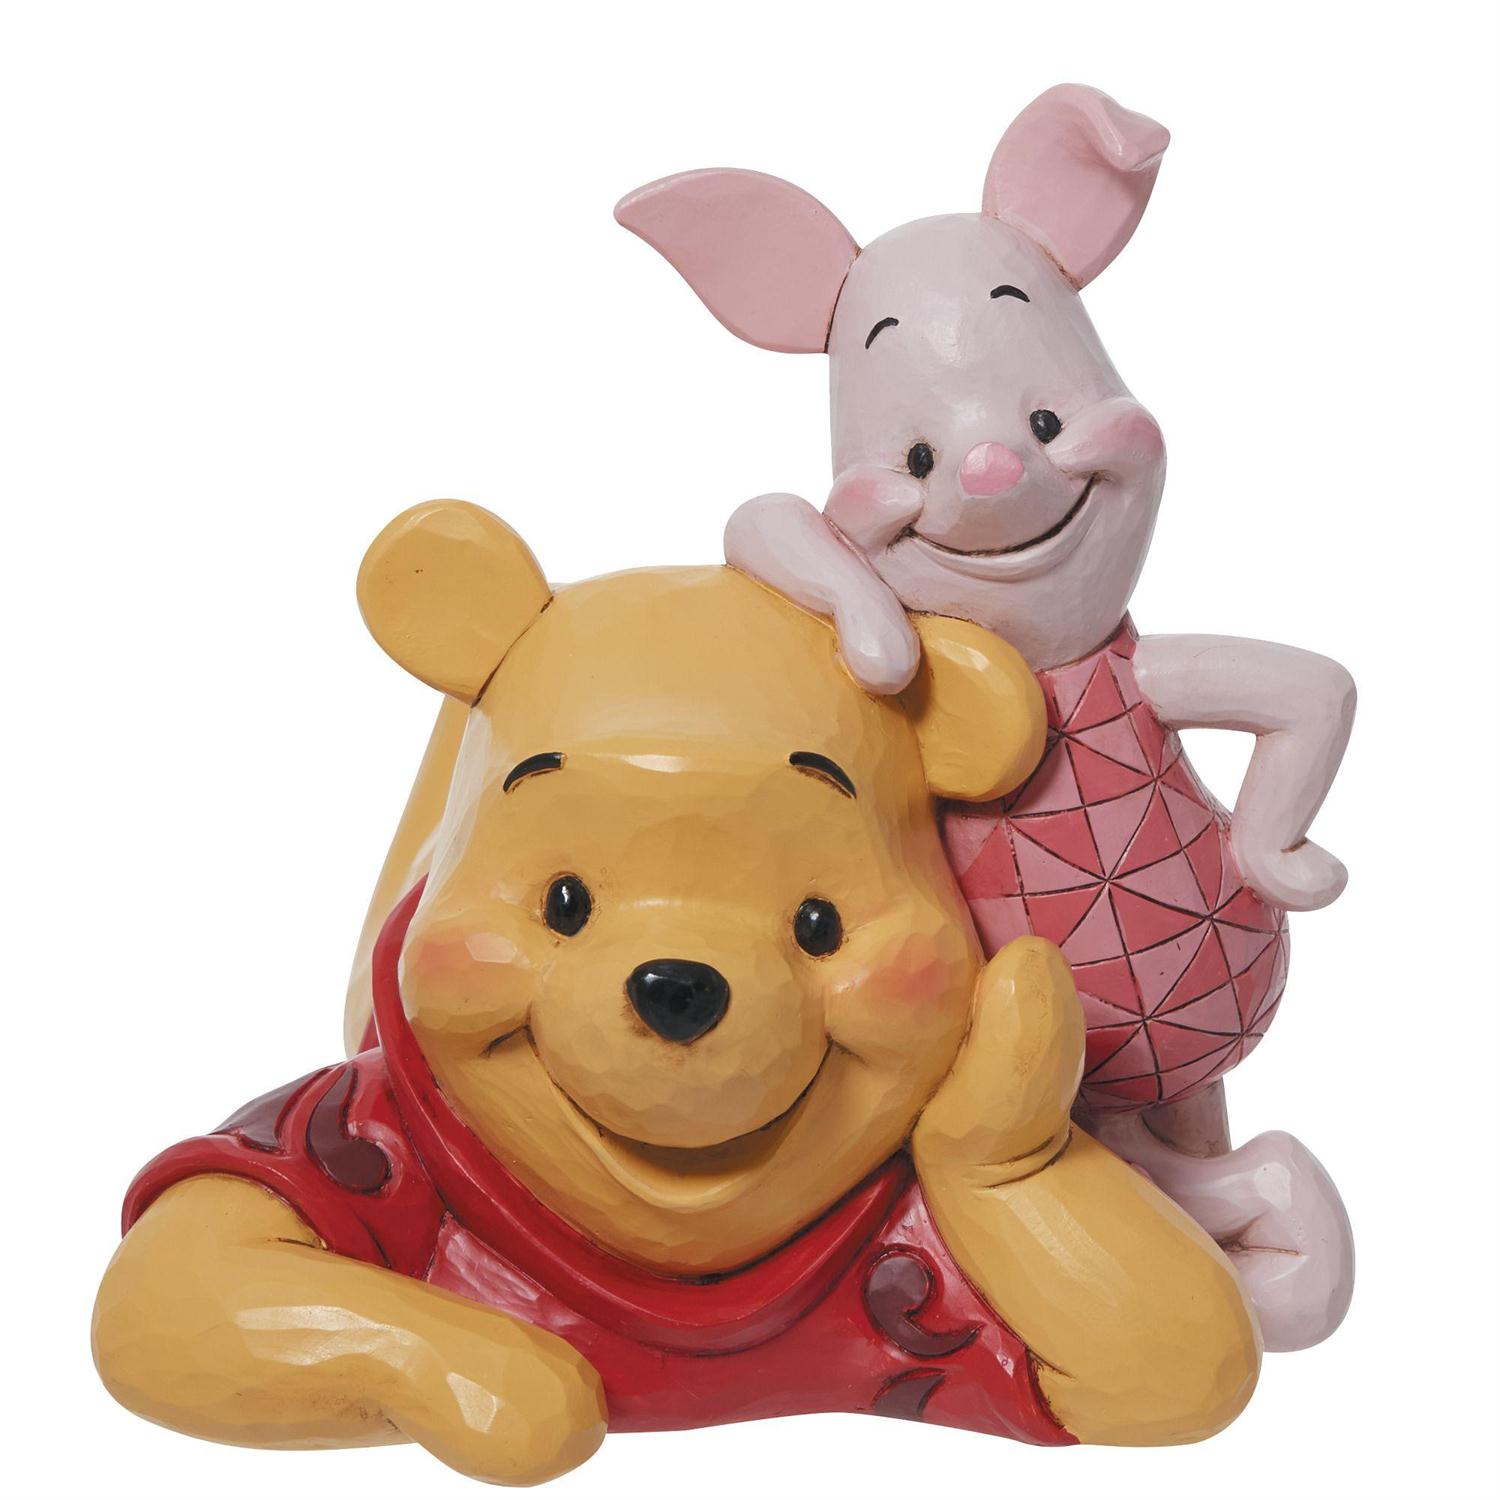 https://iveysgiftsandmore.com/822/enesco-gifts-jim-shore-disney-traditions-winnie-the-pooh-forever-friends-figurine.jpg